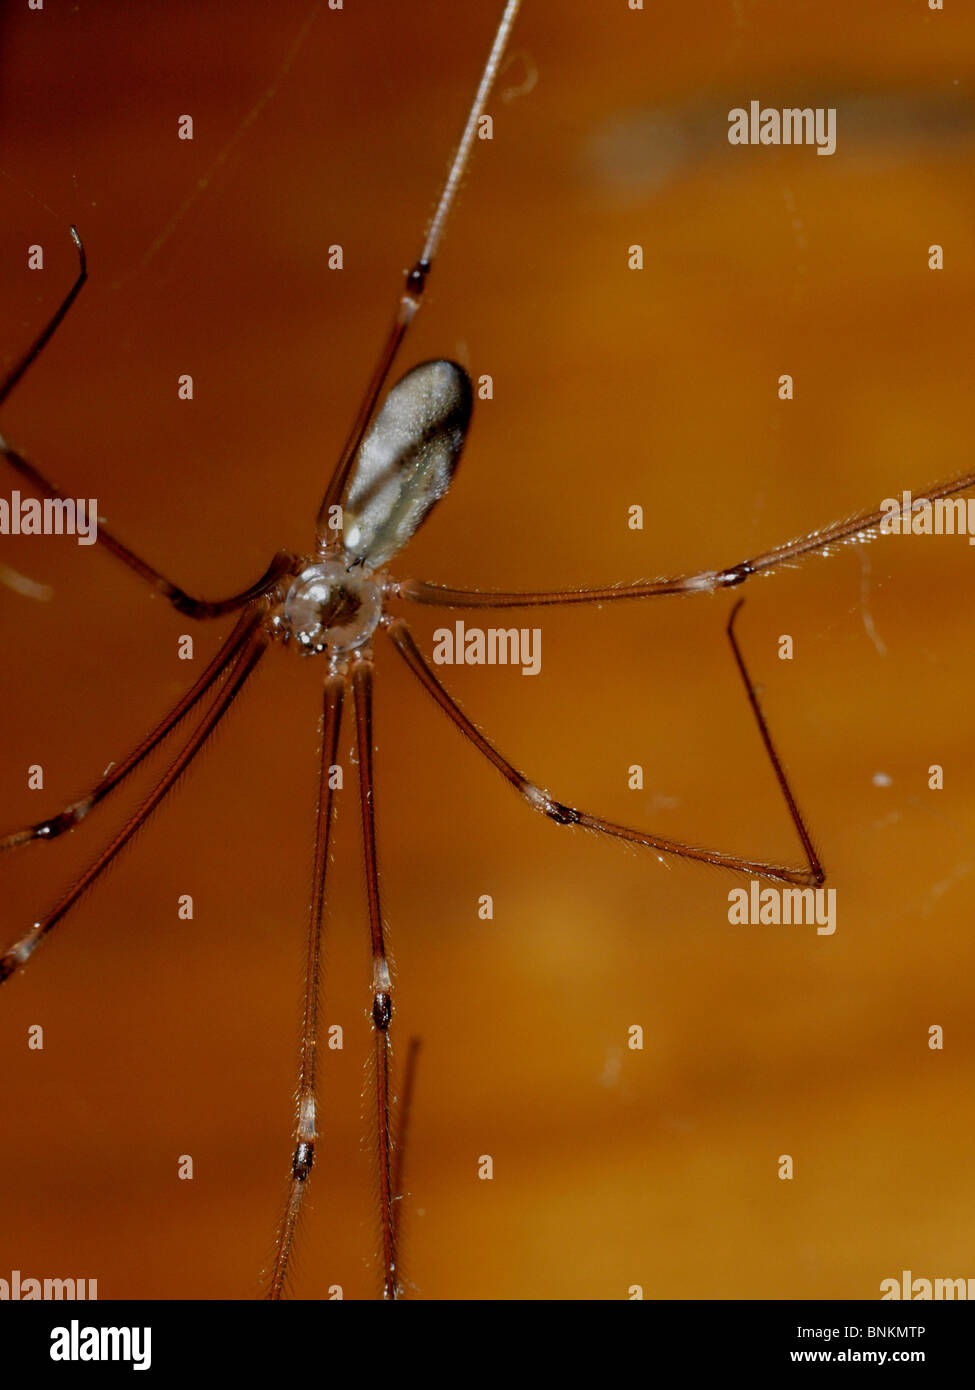 Mysterious spider on orange background Stock Photo